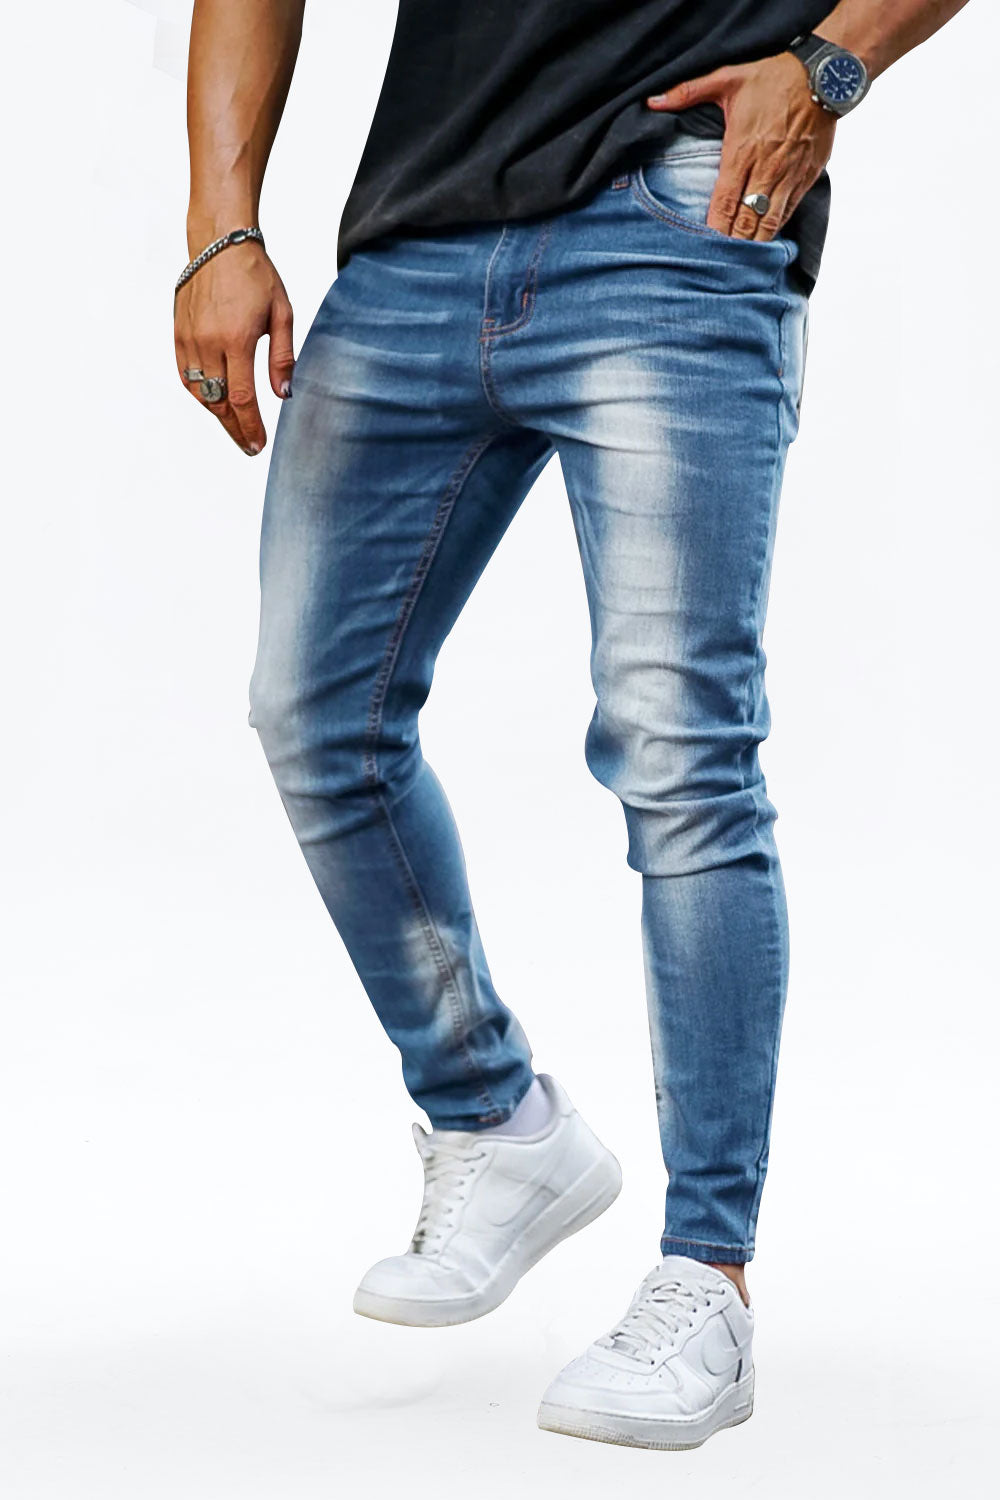 GINGTTO Jeans for Men Slim Fit Skinny Elastic Waist Pants Men Blue 28 Waist  30 Length at  Men's Clothing store